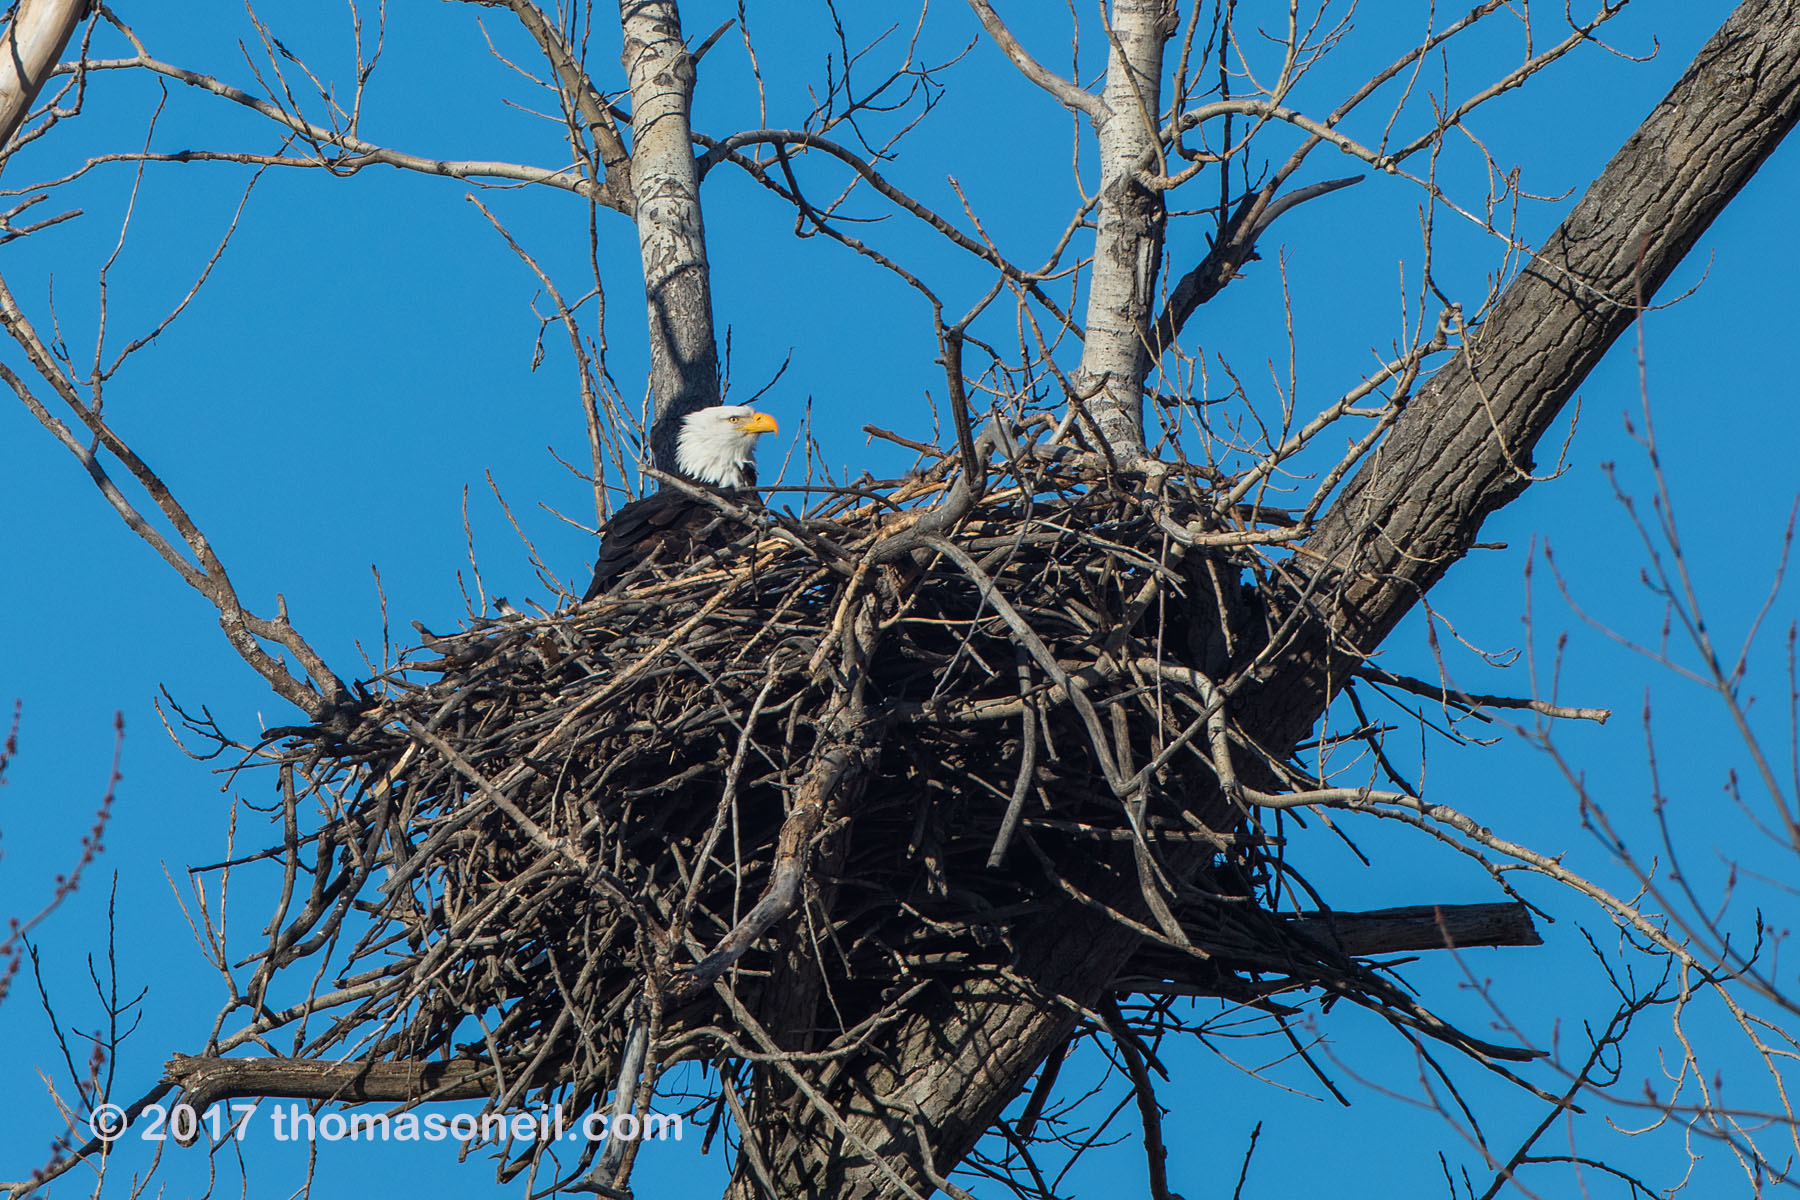 Bald eagle in nest, Loess Bluffs National Wildlife Refuge, Missouri, December 2017.  Click for next photo.